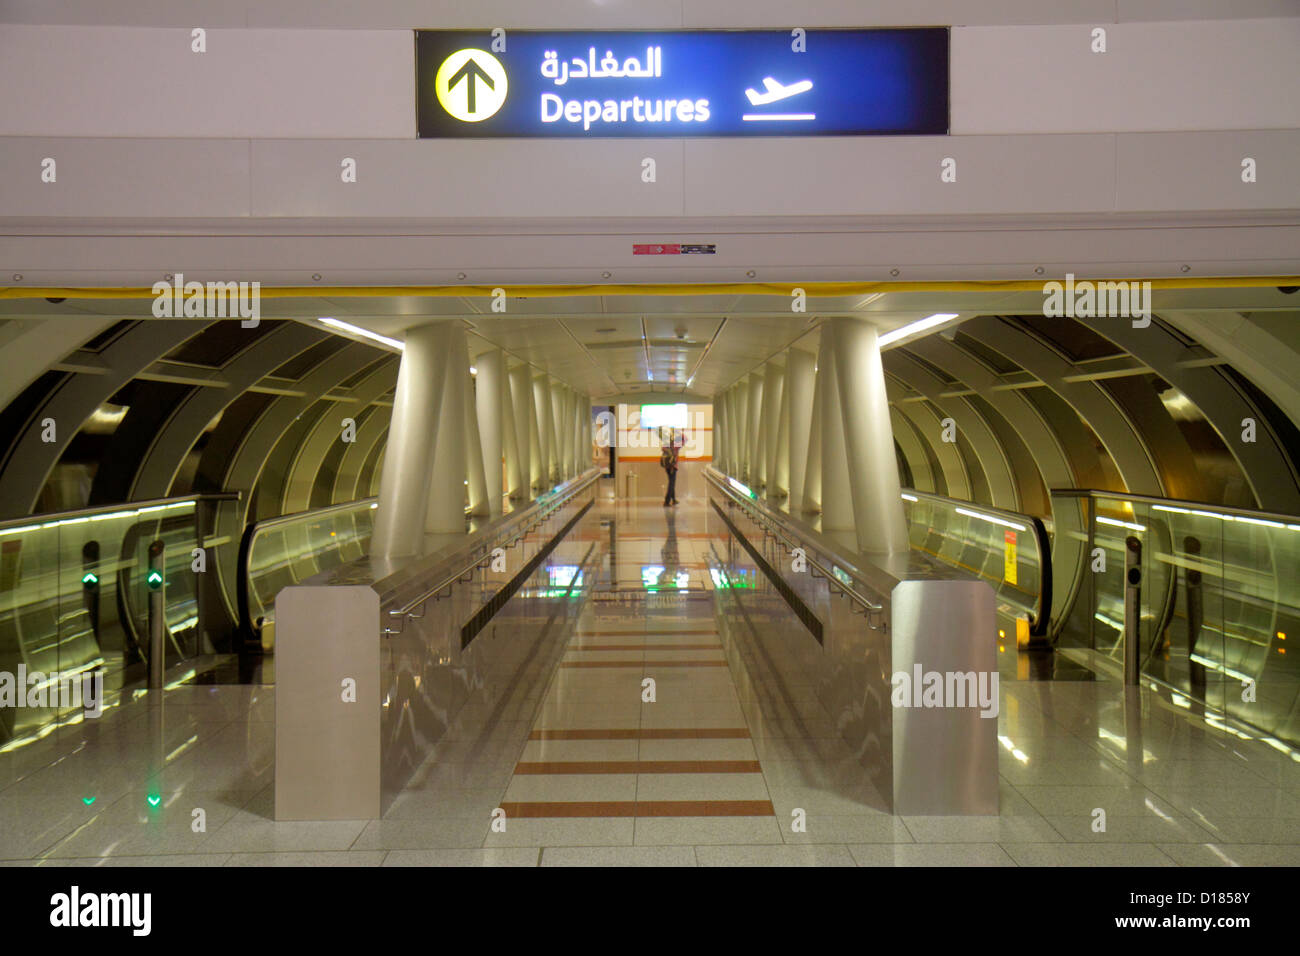 Dubai UAE,United Arab Emirates,Dubai International Airport,terminal,English,Arabic,language,bilingual,sign,arrow,departures,moving walkway,Airport Ter Stock Photo